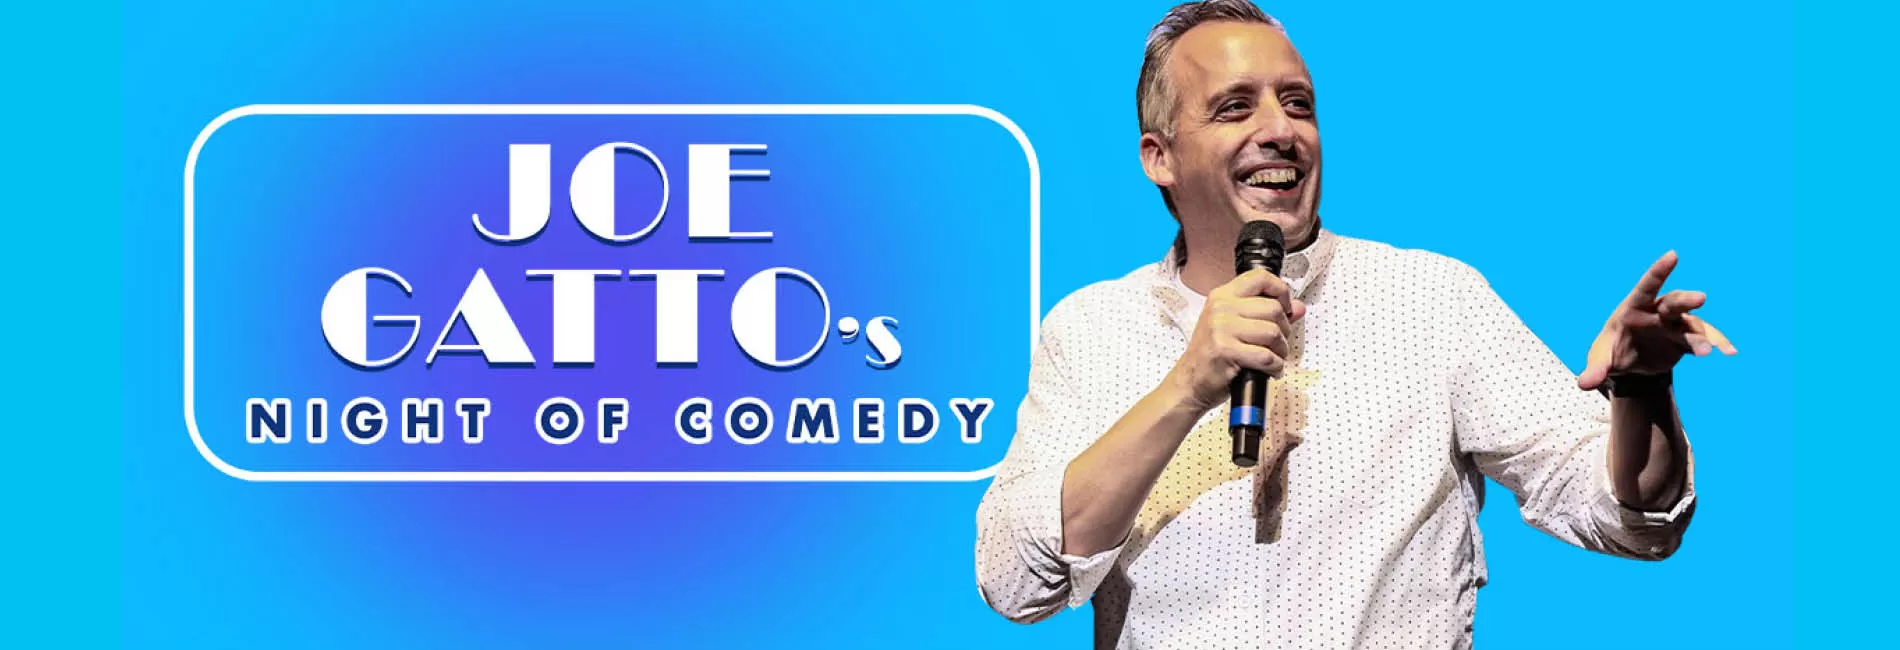 Joe Gatto "Night of Comedy"